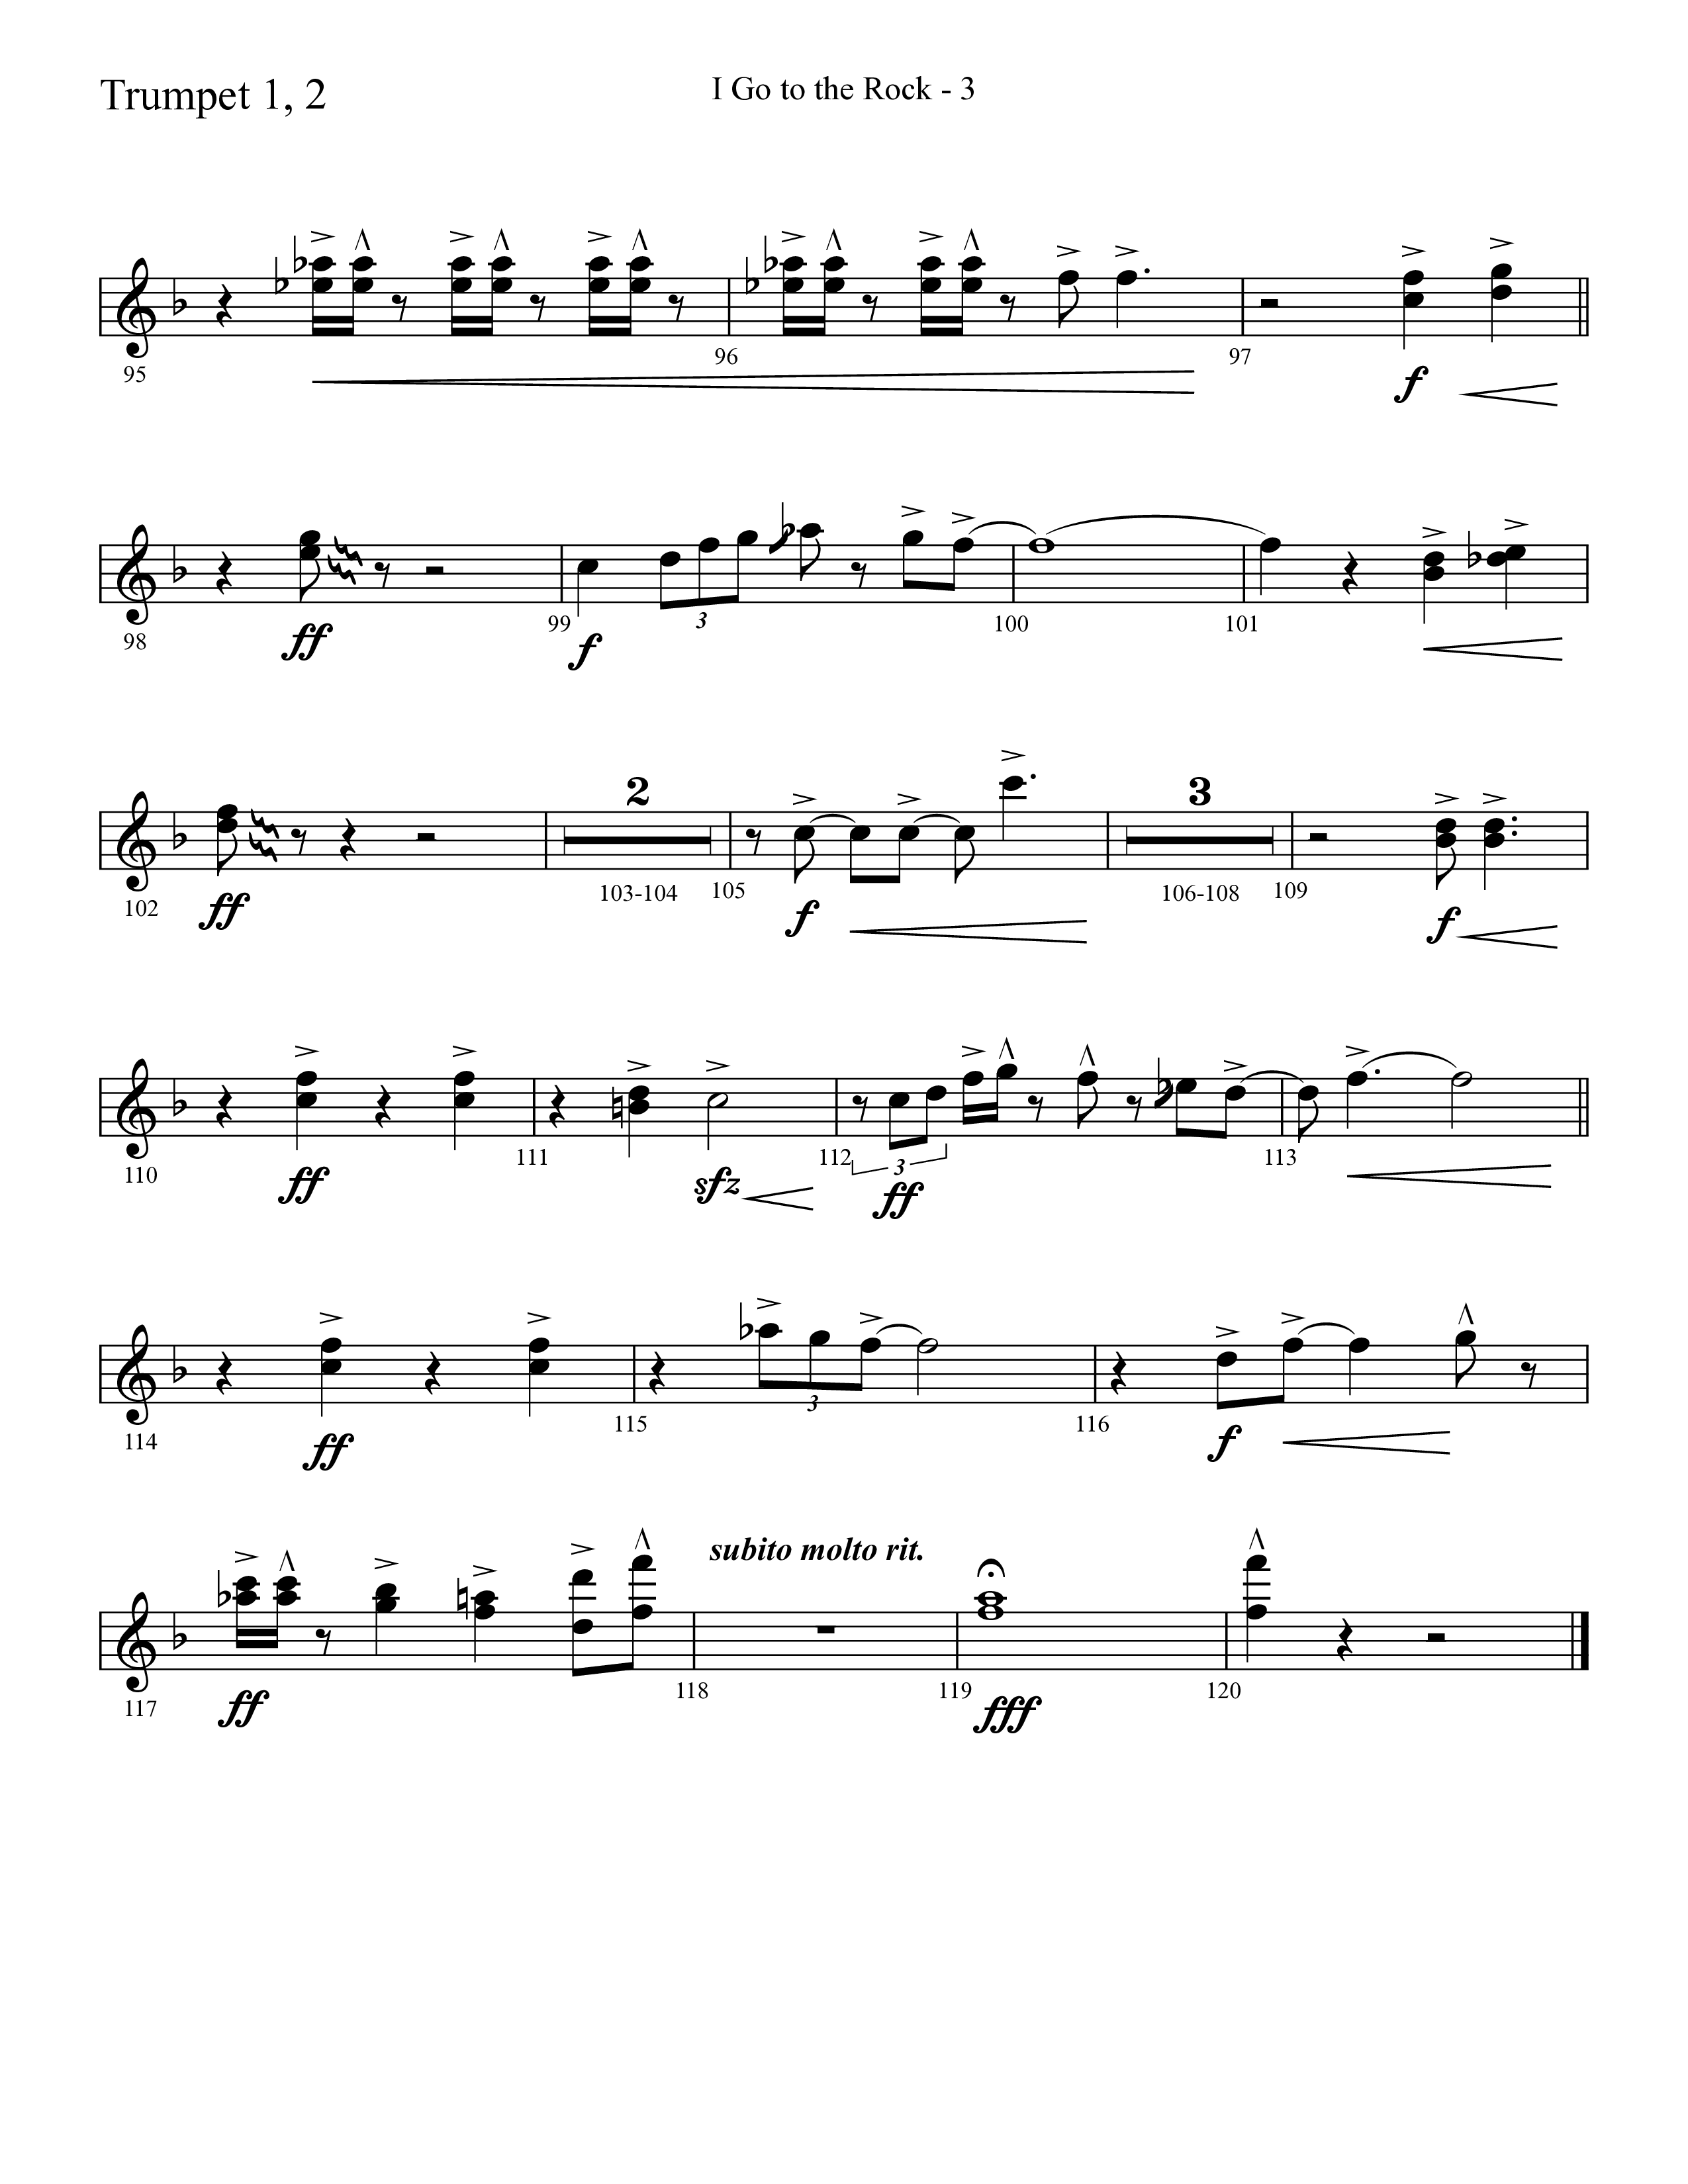 I Go To The Rock (Choral Anthem SATB) Trumpet 1,2 (Lifeway Choral / Arr. Cliff Duren)